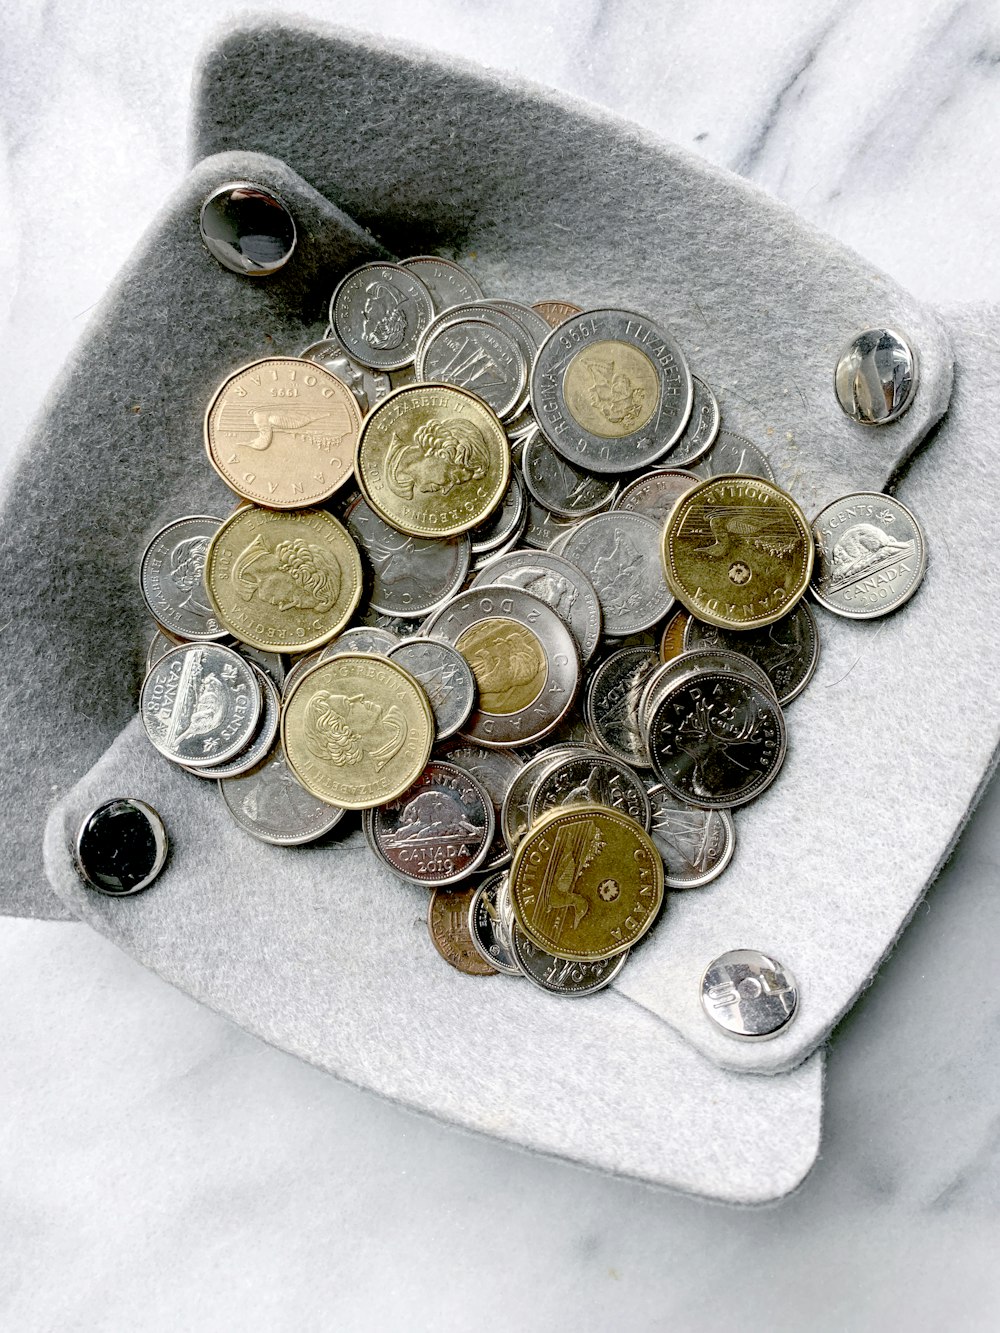 Monedas redondas de oro y plata sobre superficie gris